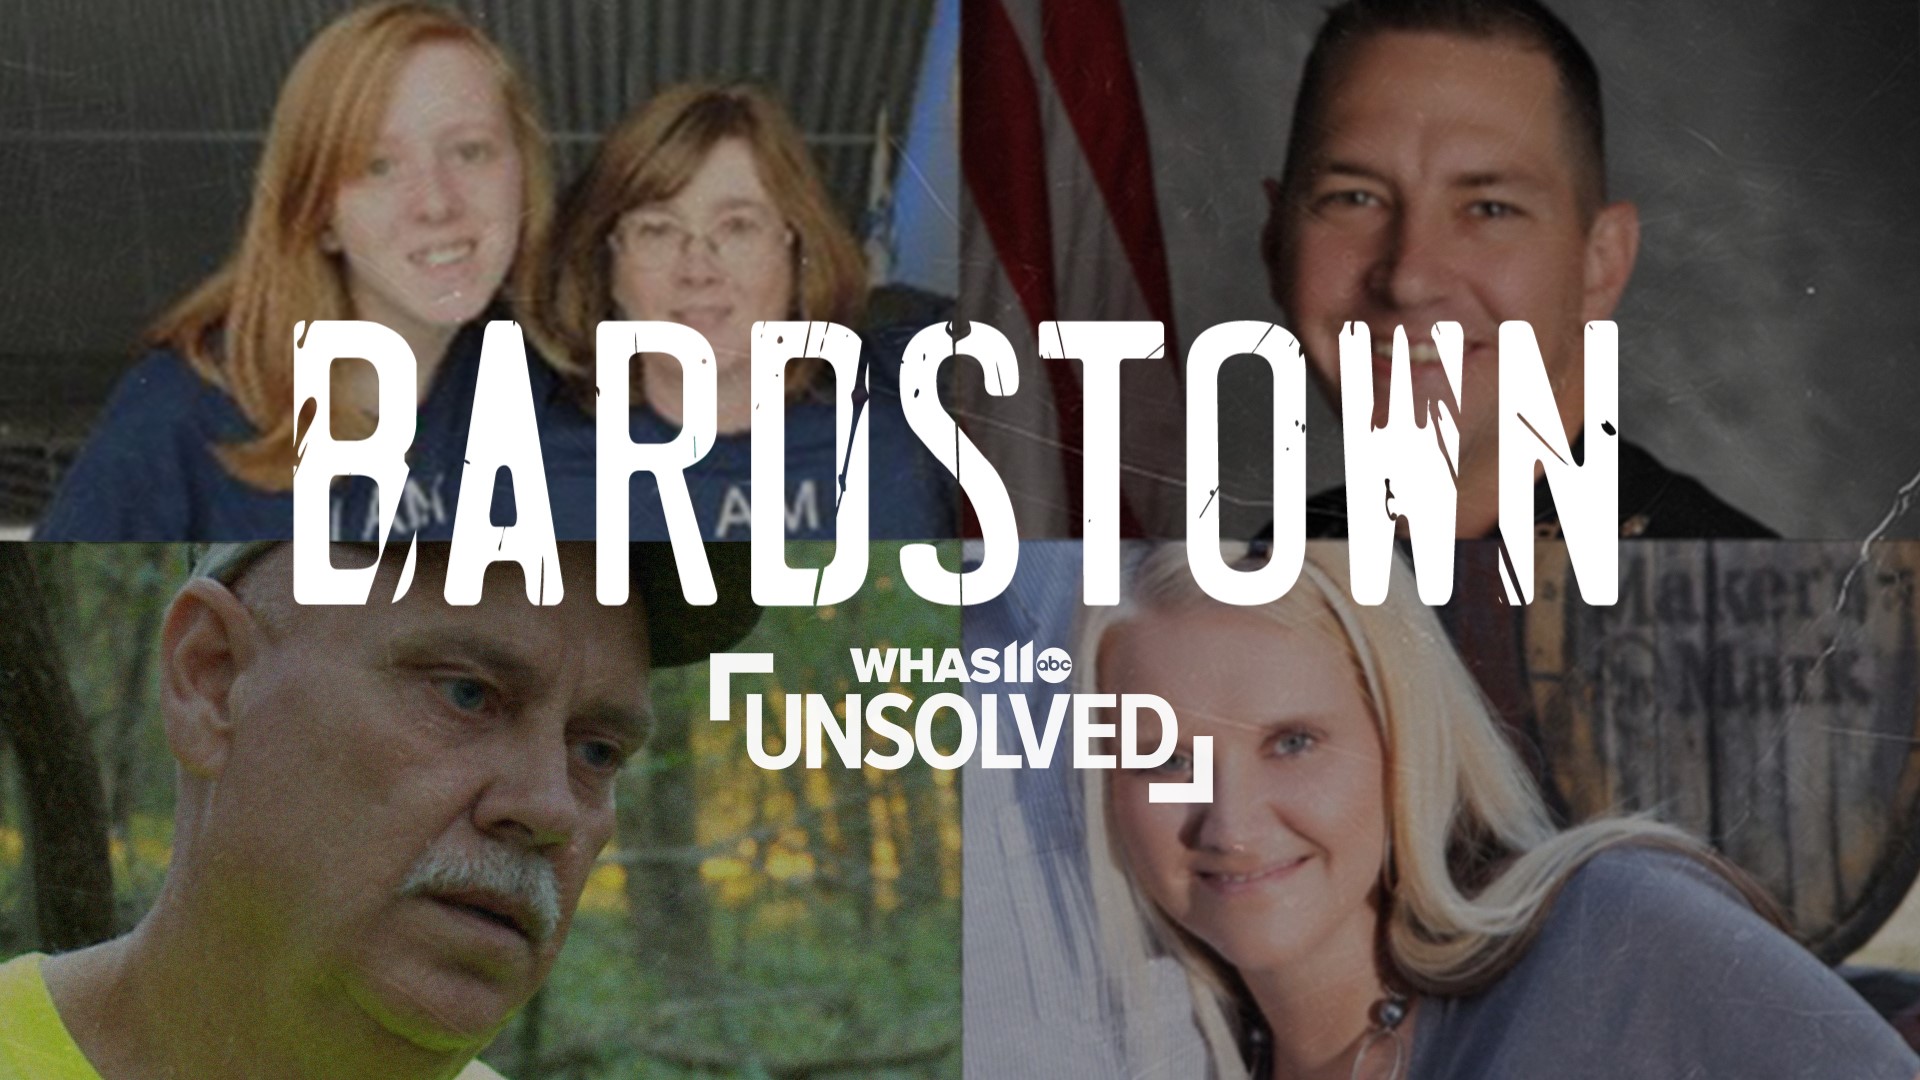 Unsolved Bardstown murders added to FBI Louisville website